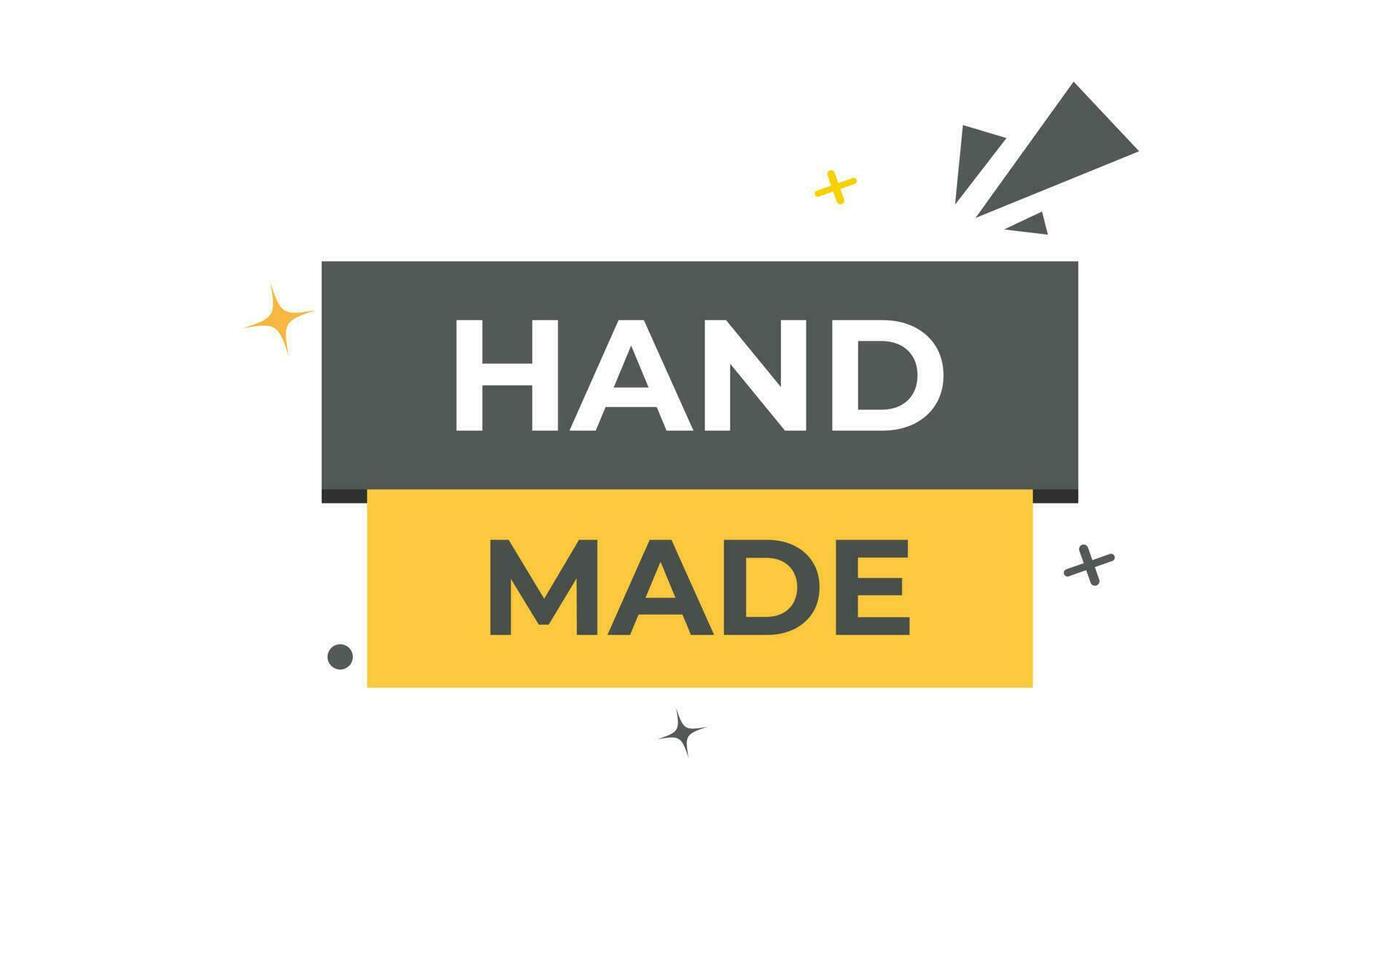 Hand Made Button. Speech Bubble, Banner Label Hand Made vector